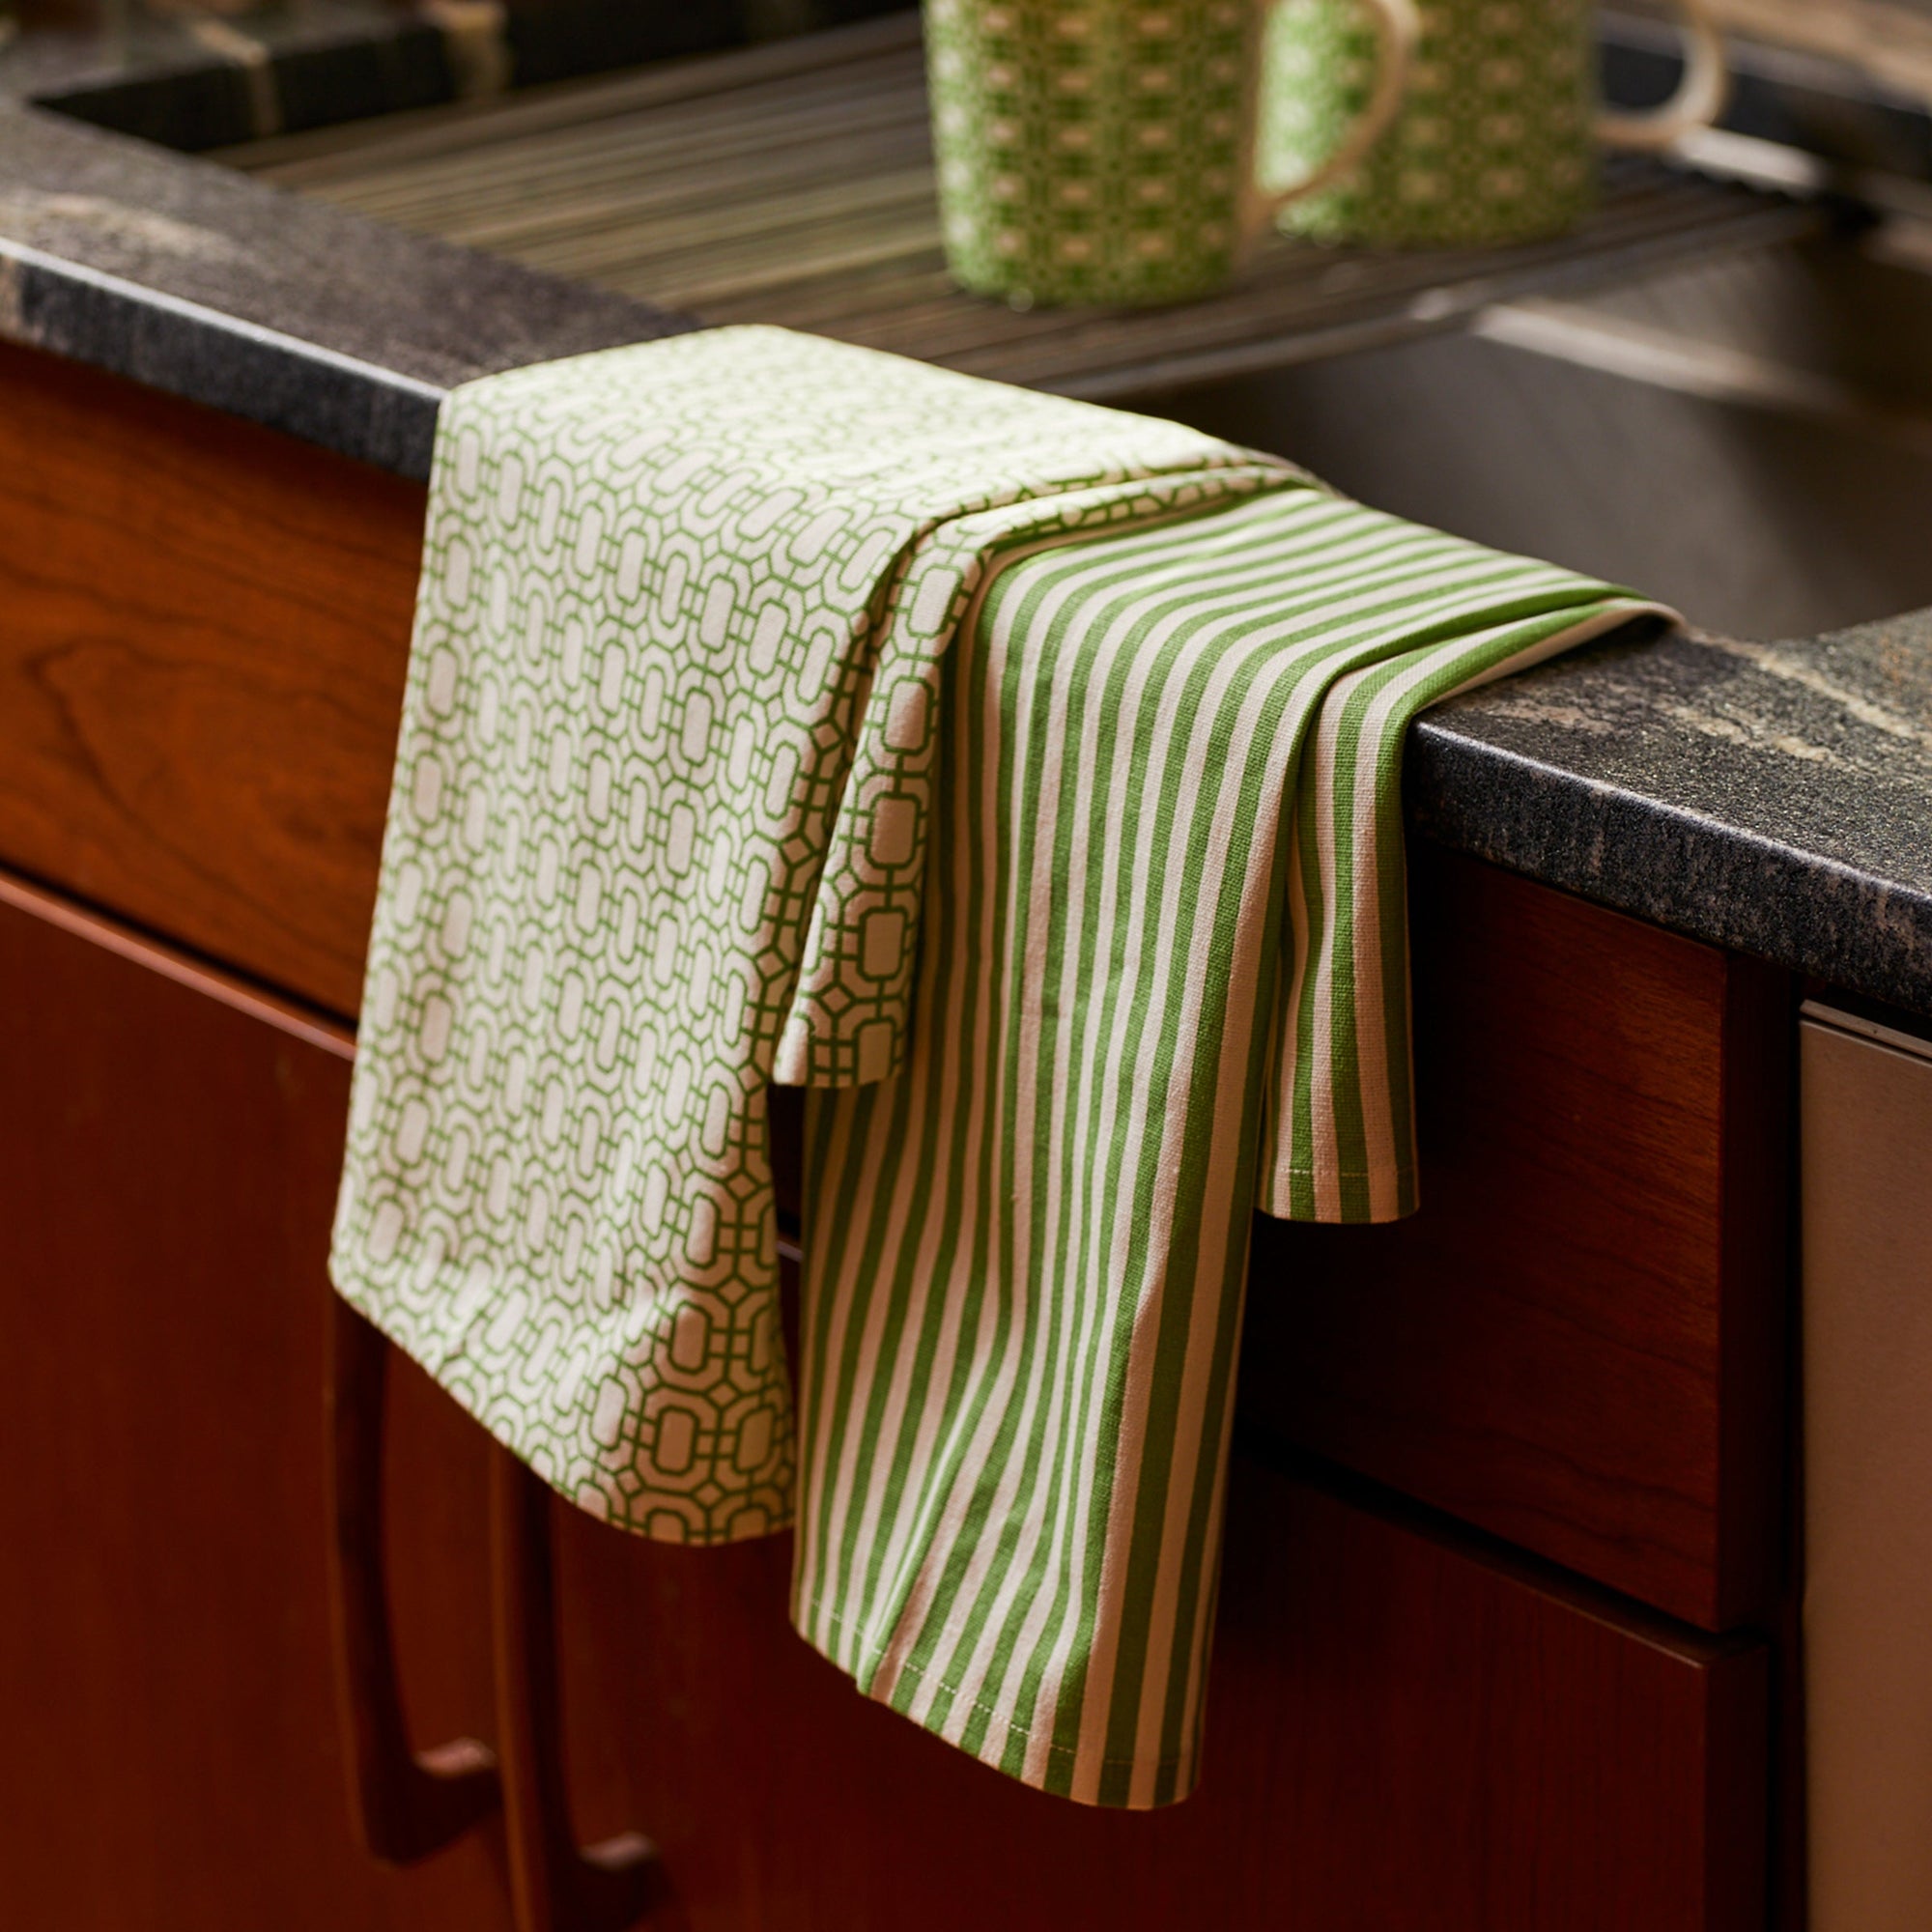 Kitchen Towels